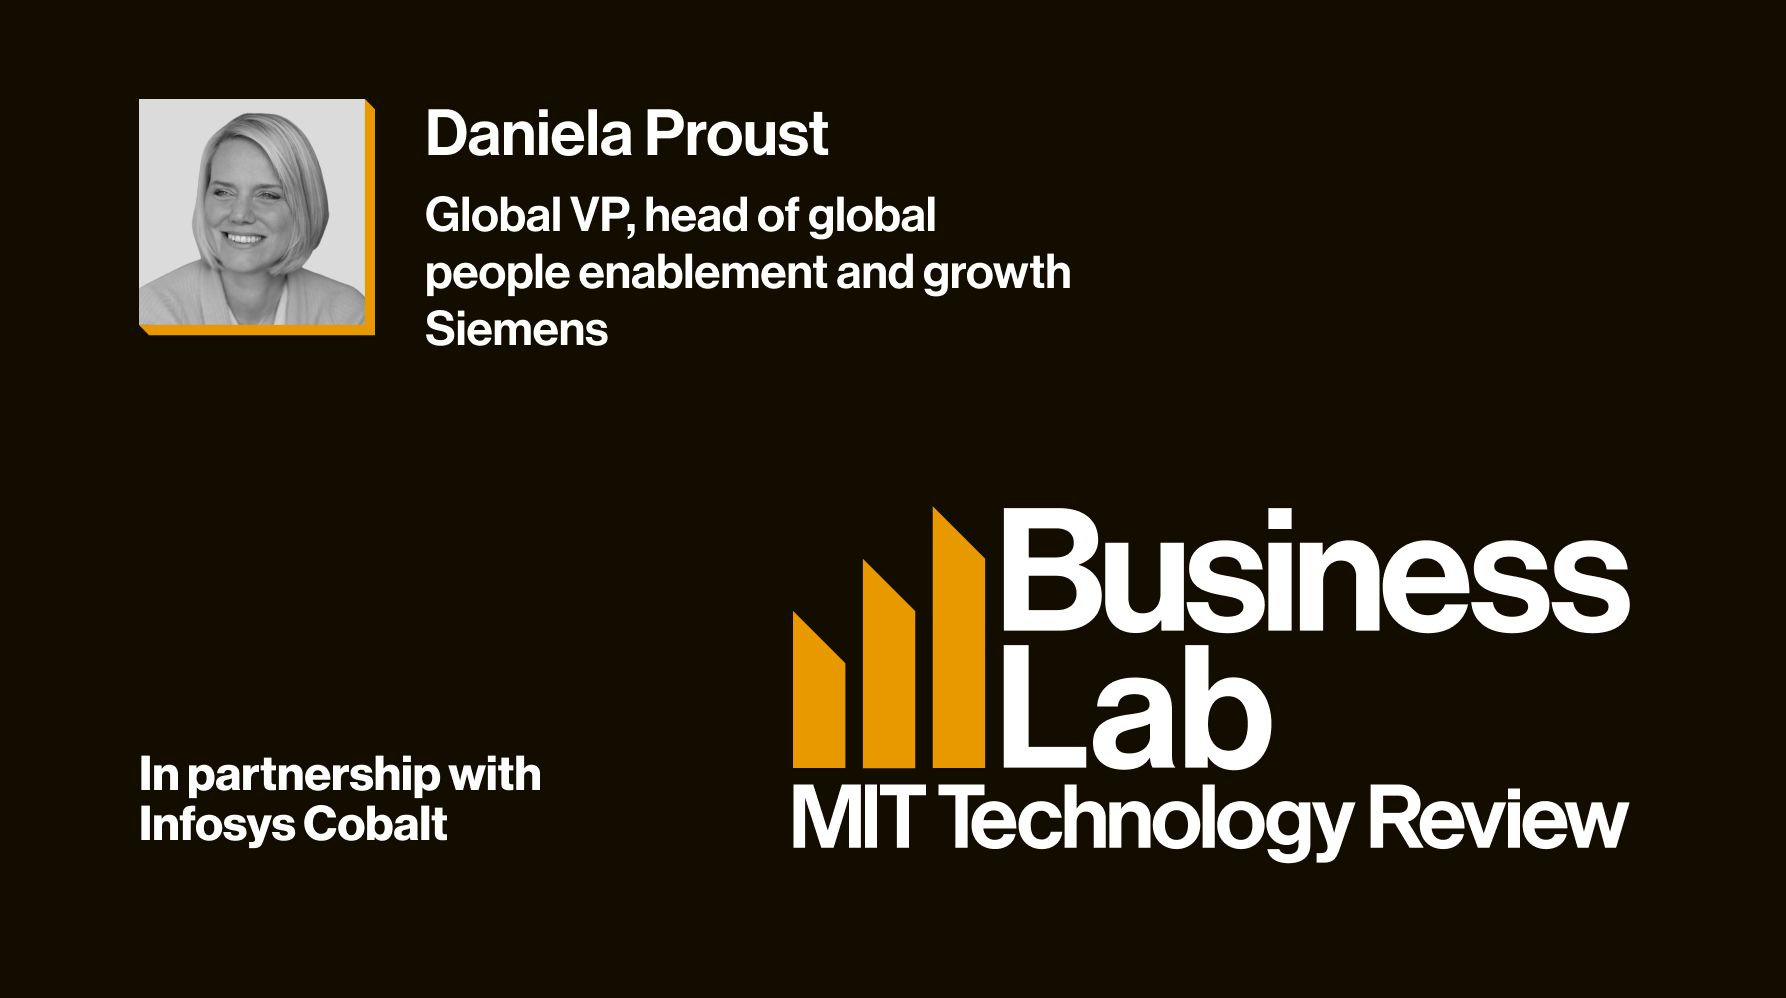 Daniela Proust headshot on business lab card